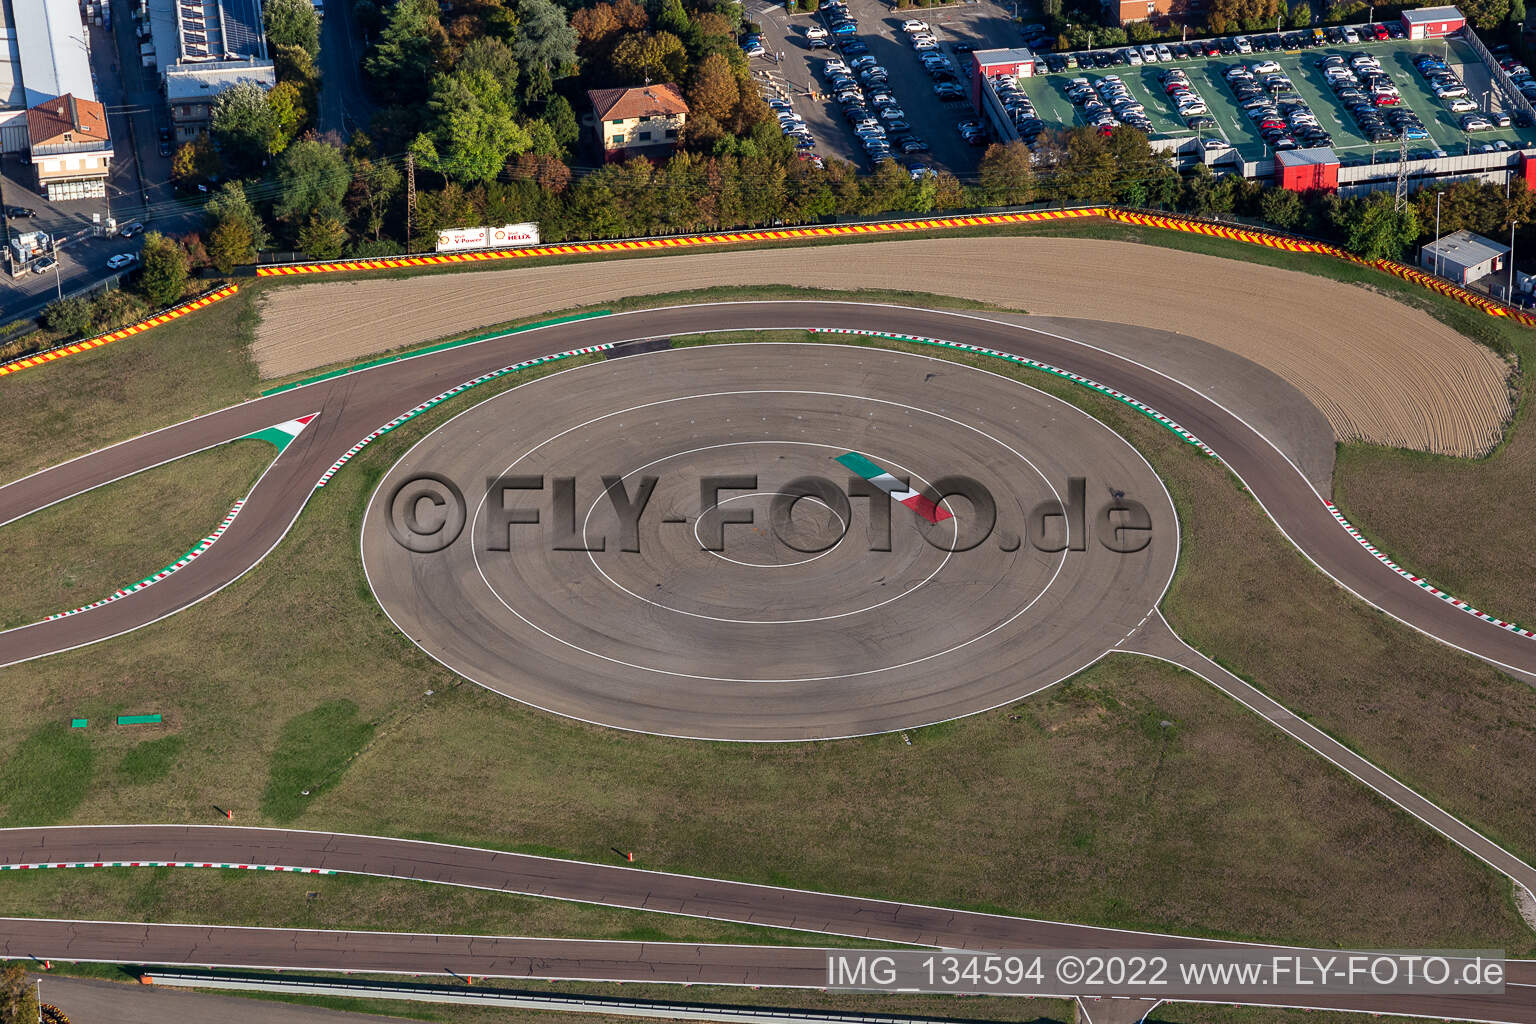 Formel 1 Rennstrecke von Ferrari, Pista di Fiorano, Circuito di Fiorano in Fiorano Modenese im Bundesland Modena, Italien aus der Luft betrachtet